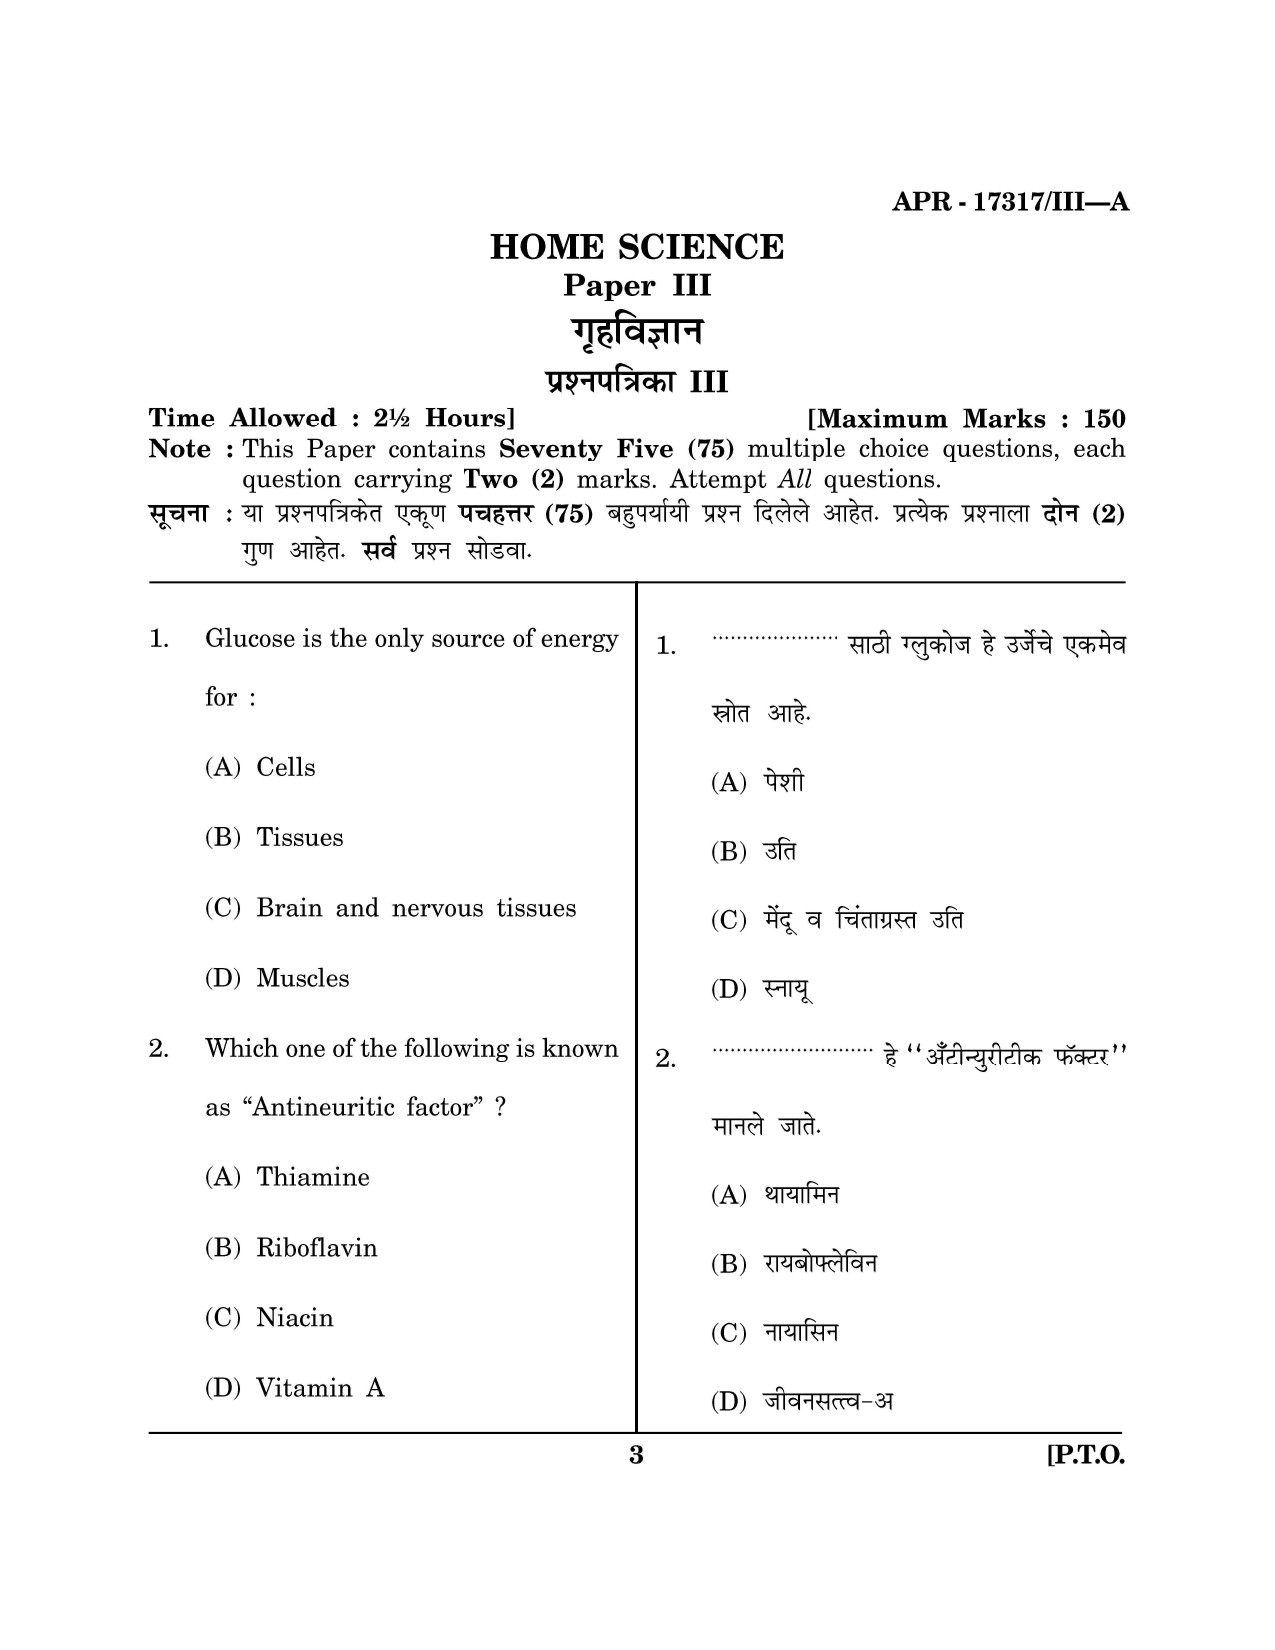 Maharashtra SET Home Science Question Paper III April 2017 2